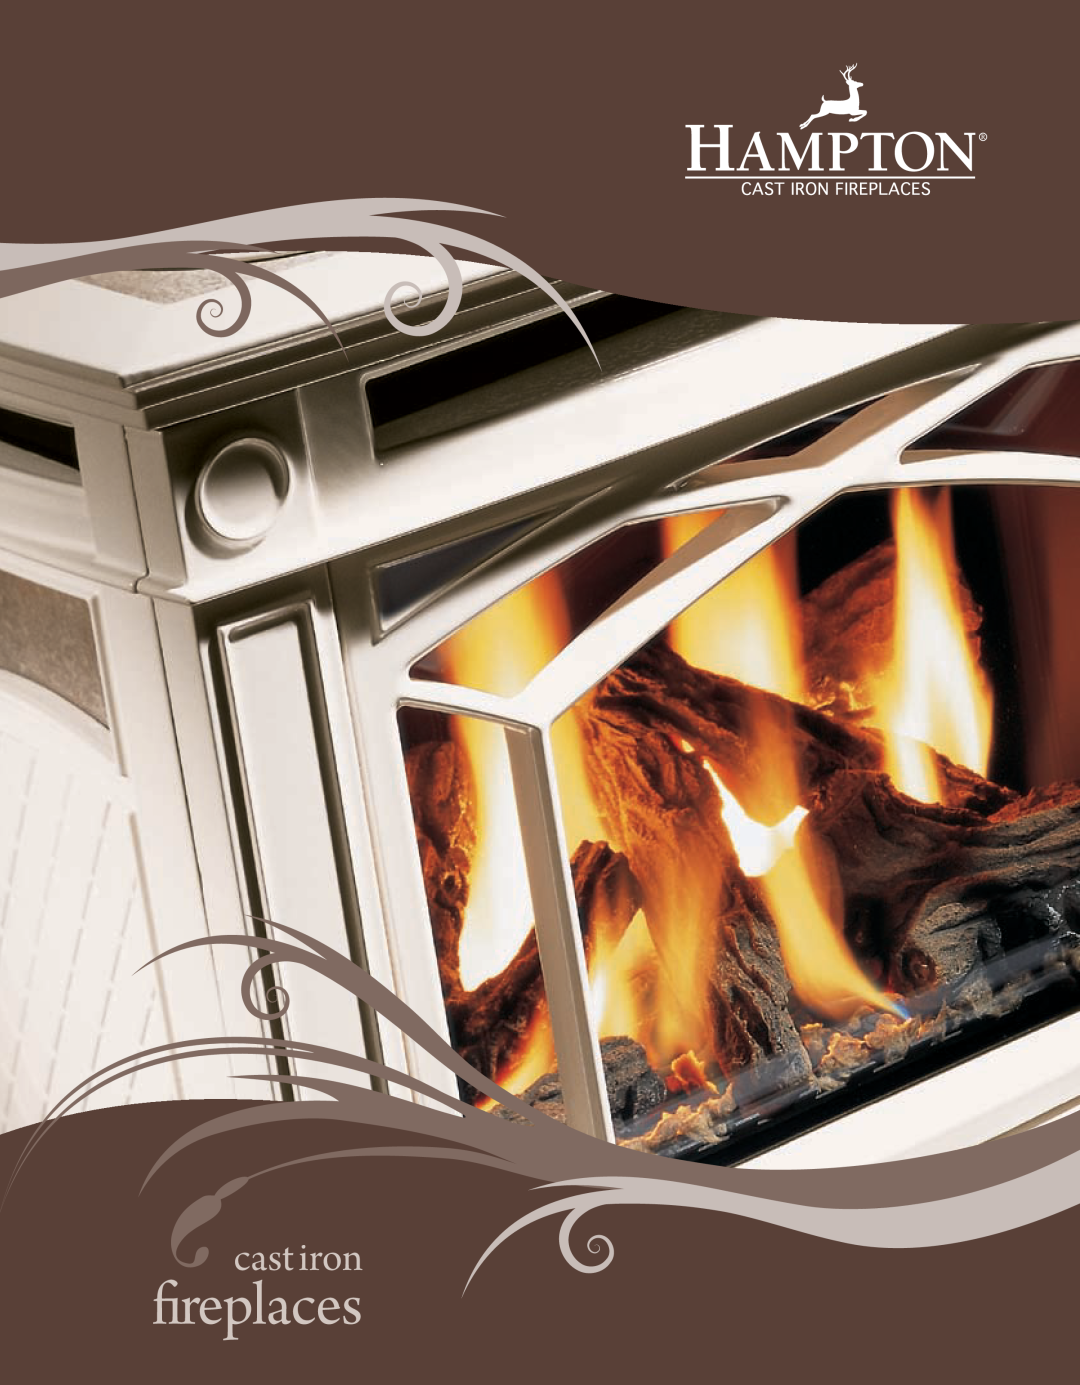 Regency H15, H200, HI300, H25, H300, HI200, H35 manual fireplaces, cast iron 